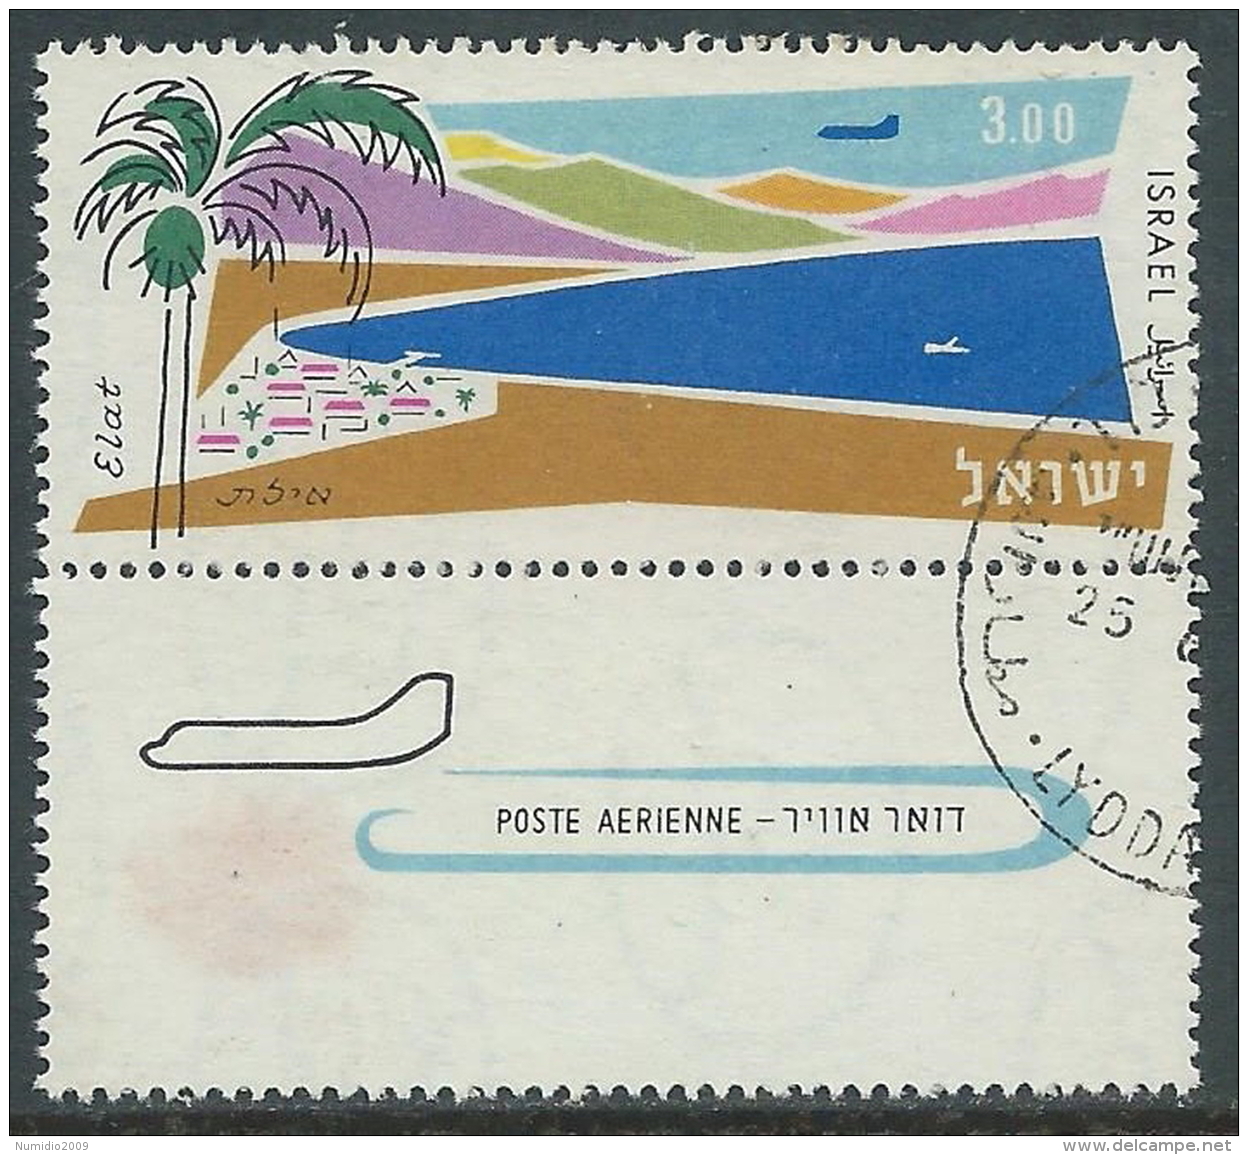 1960-62 ISRAELE USATO POSTA AEREA VEDUTE DI CITTA 3 L CON APPENDICE - T18-8 - Airmail